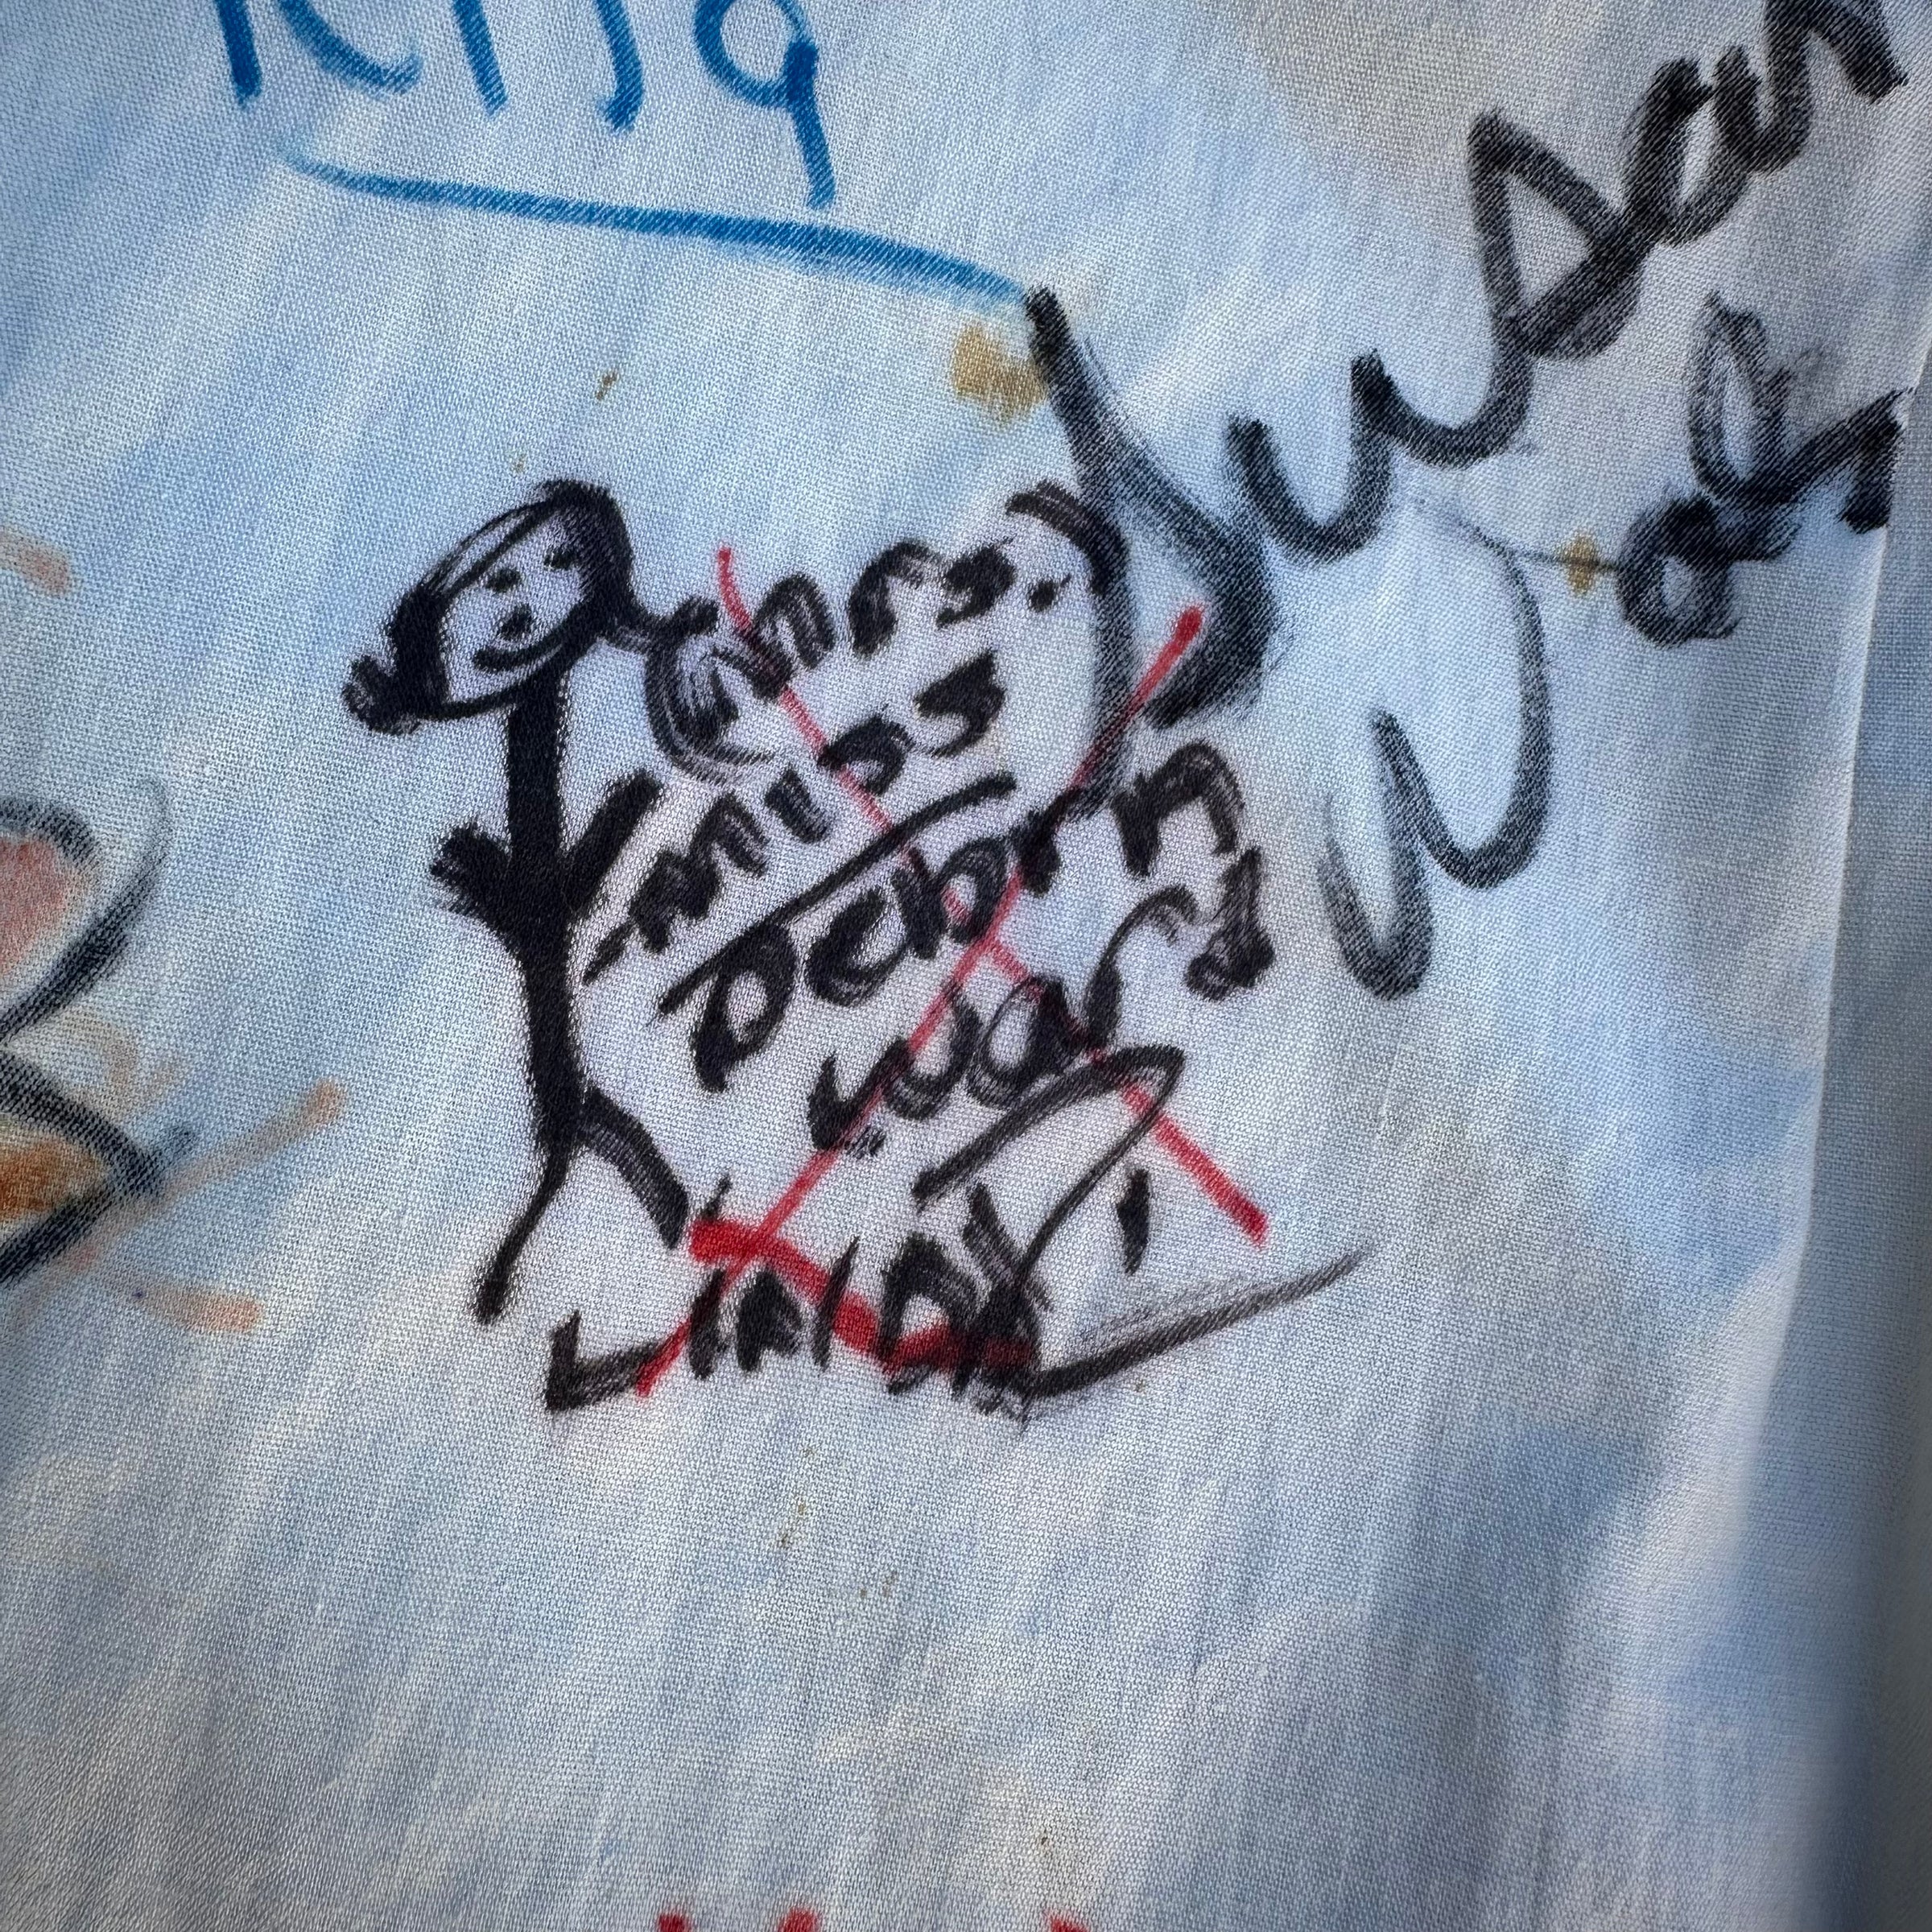 1960’s/70’s Tom Sawyer Signature/End of School Year Loop Collar Shirt XS